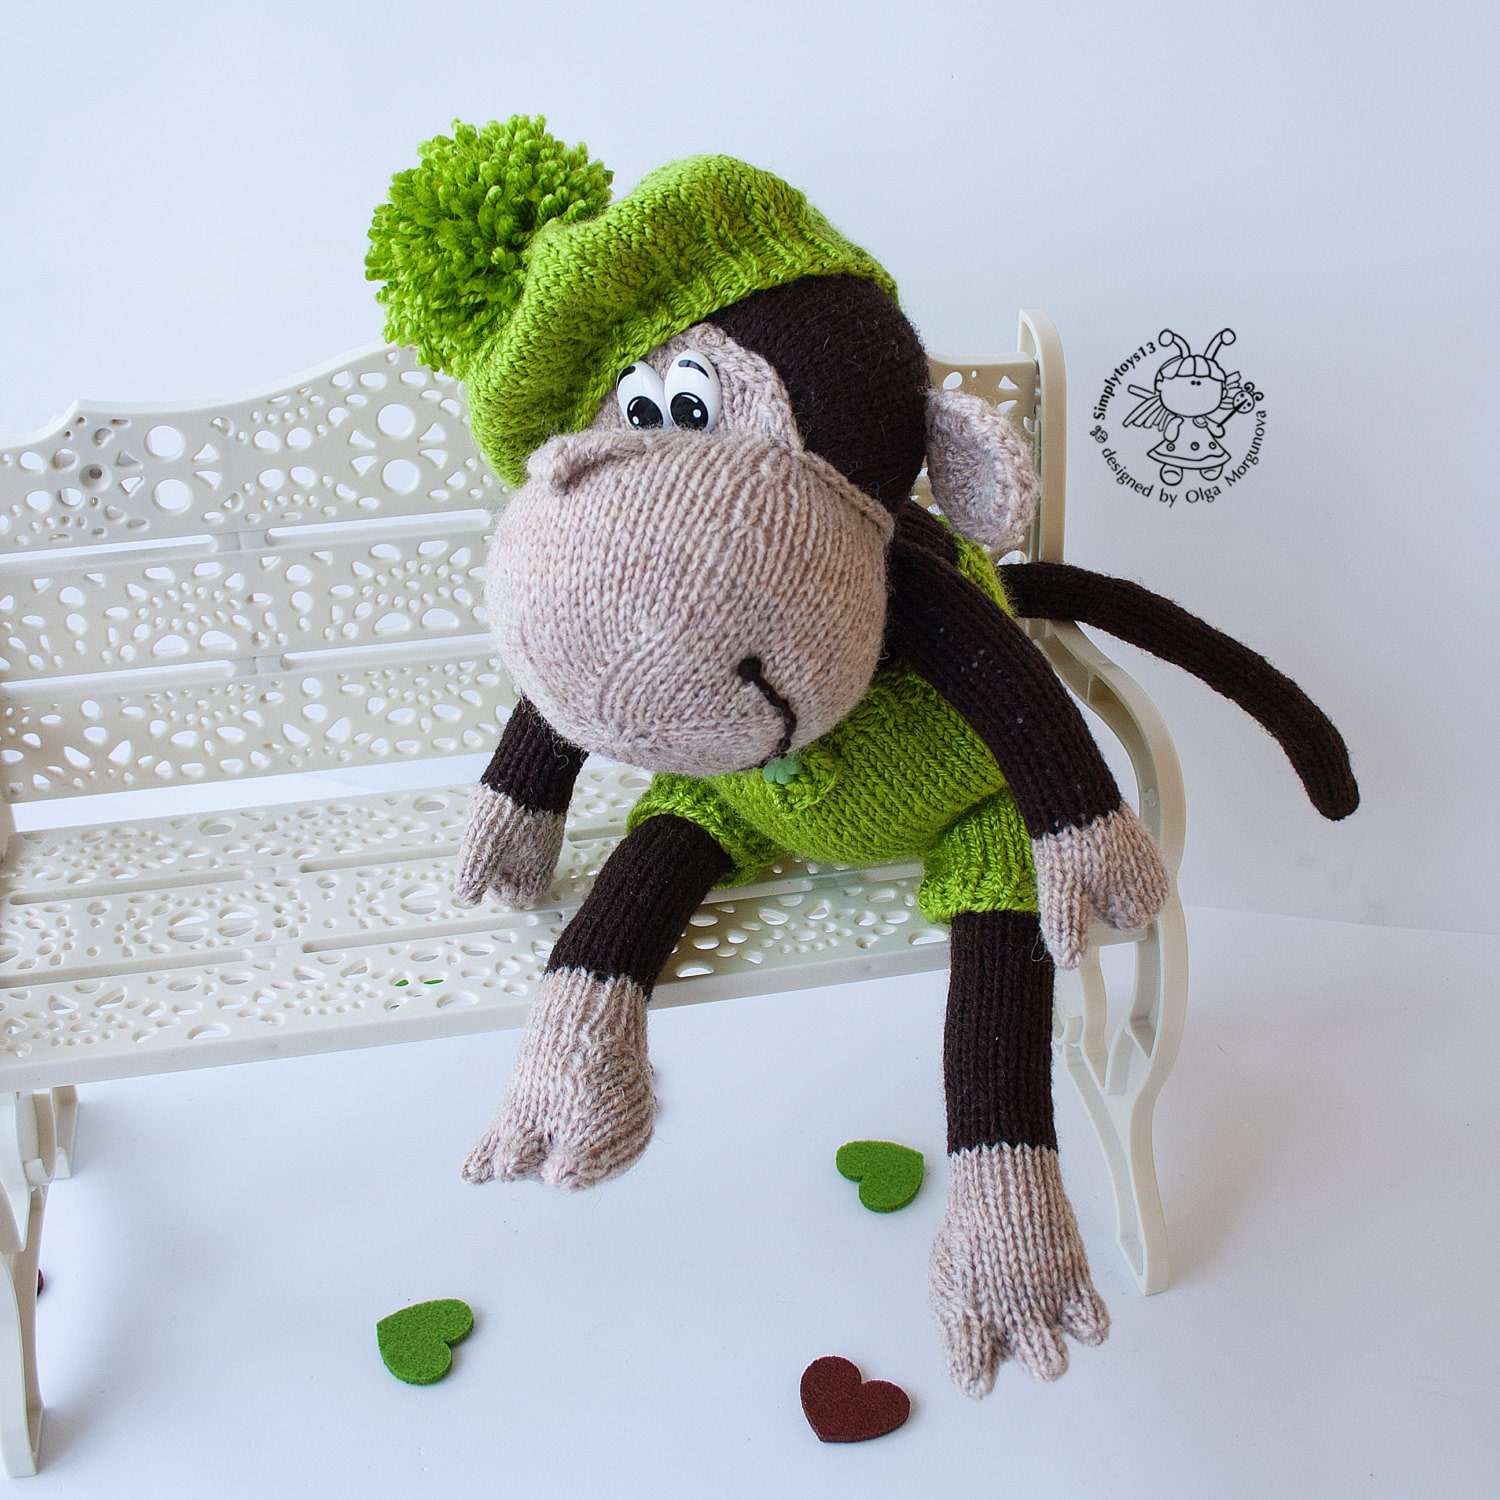 Naughty monkey-knitting pattern knitted round